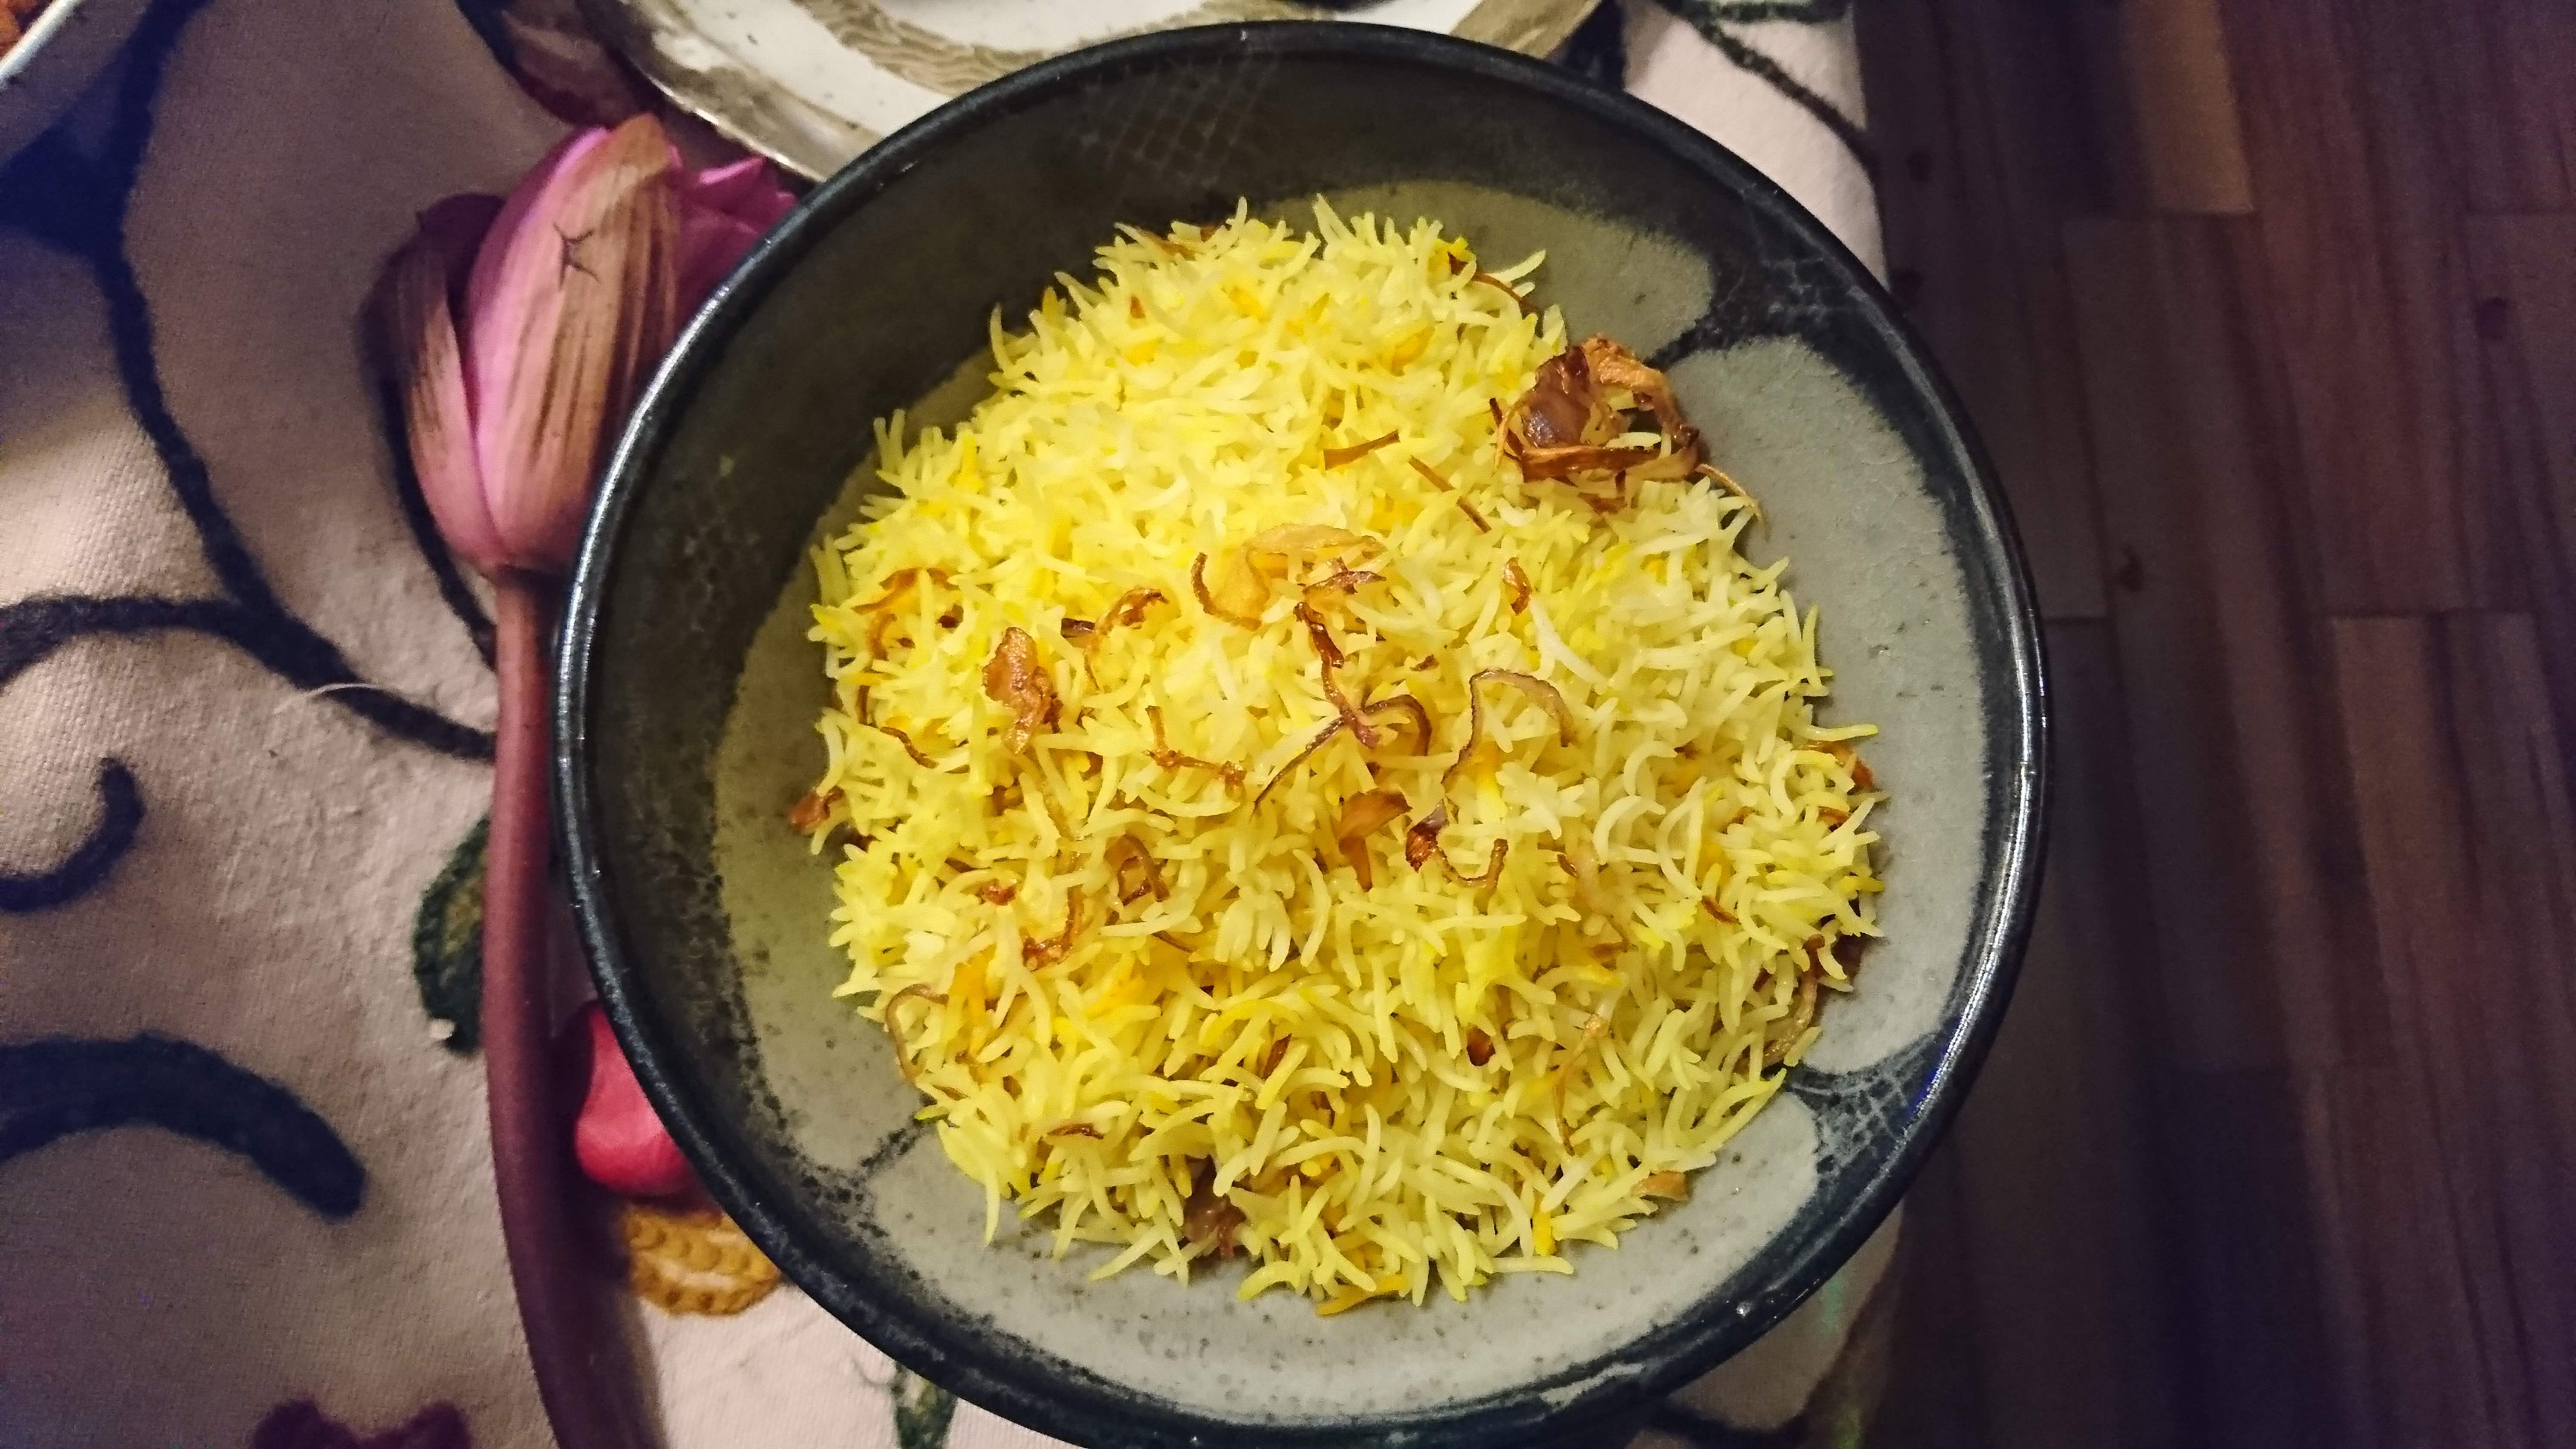 Dish,Food,Cuisine,Ingredient,Recipe,Basmati,Saffron rice,Side dish,Produce,Grated cheese